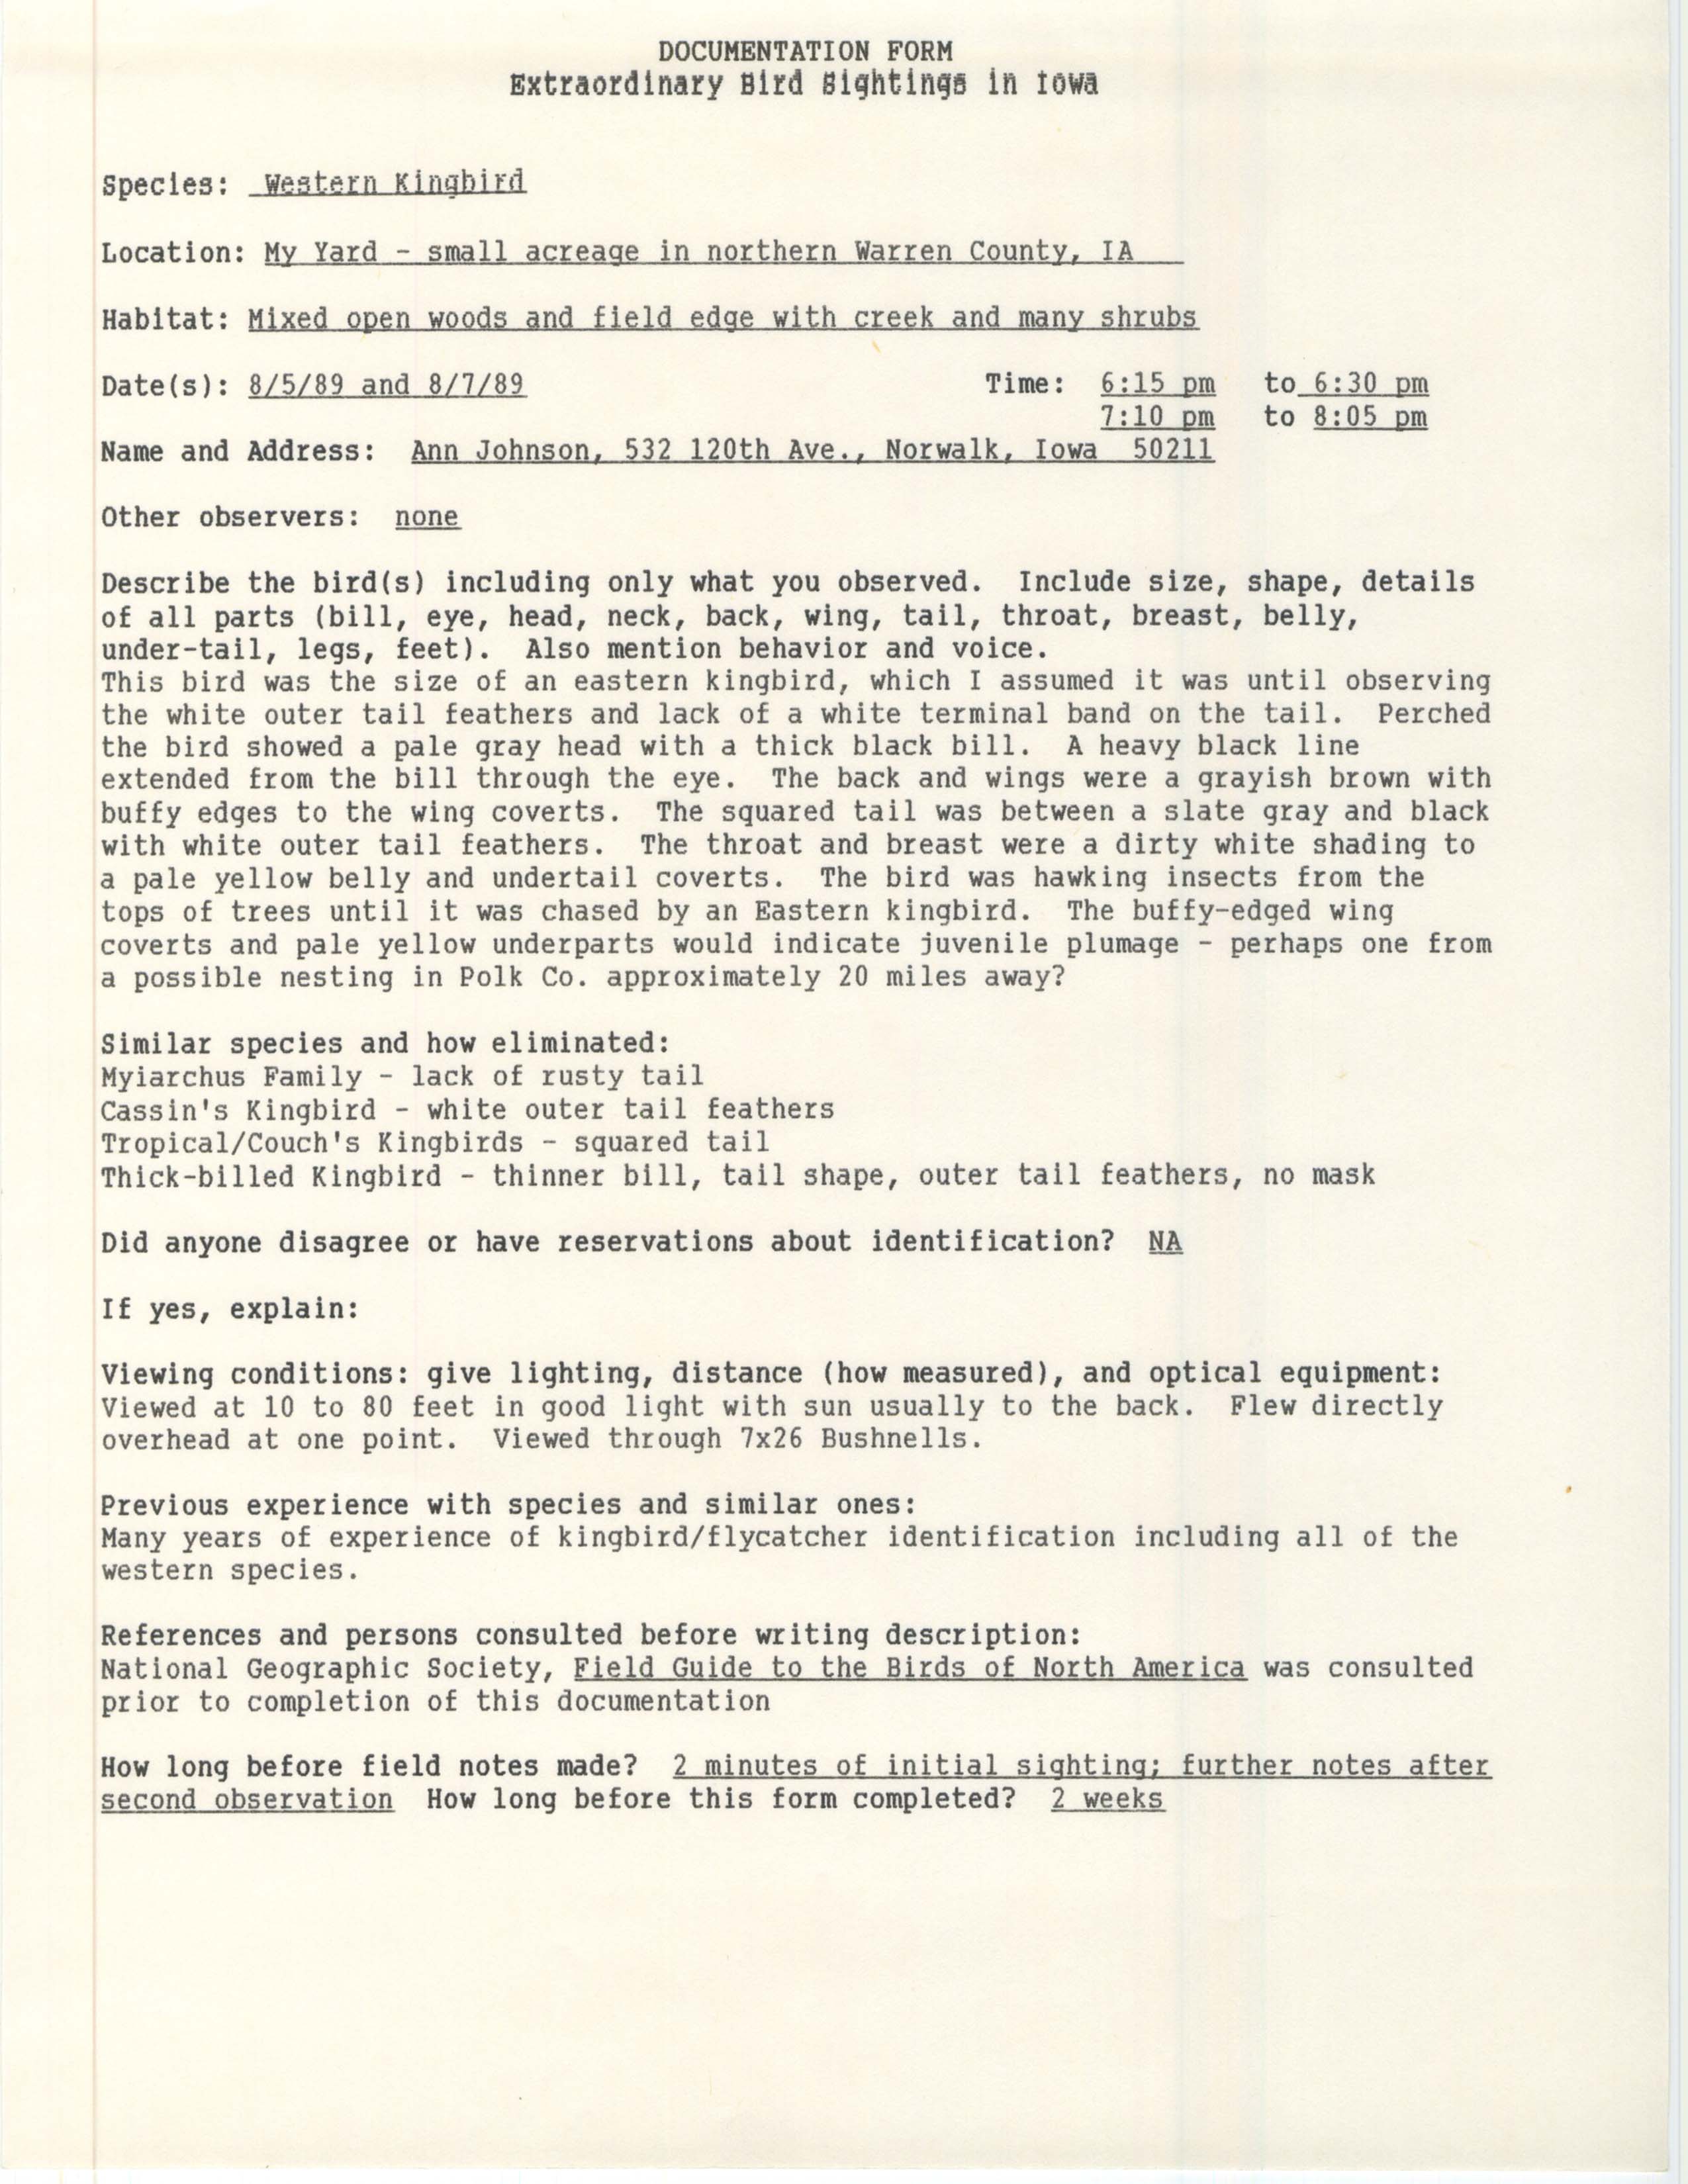 Rare bird documentation form for Western Kingbird at Norwalk in 1989